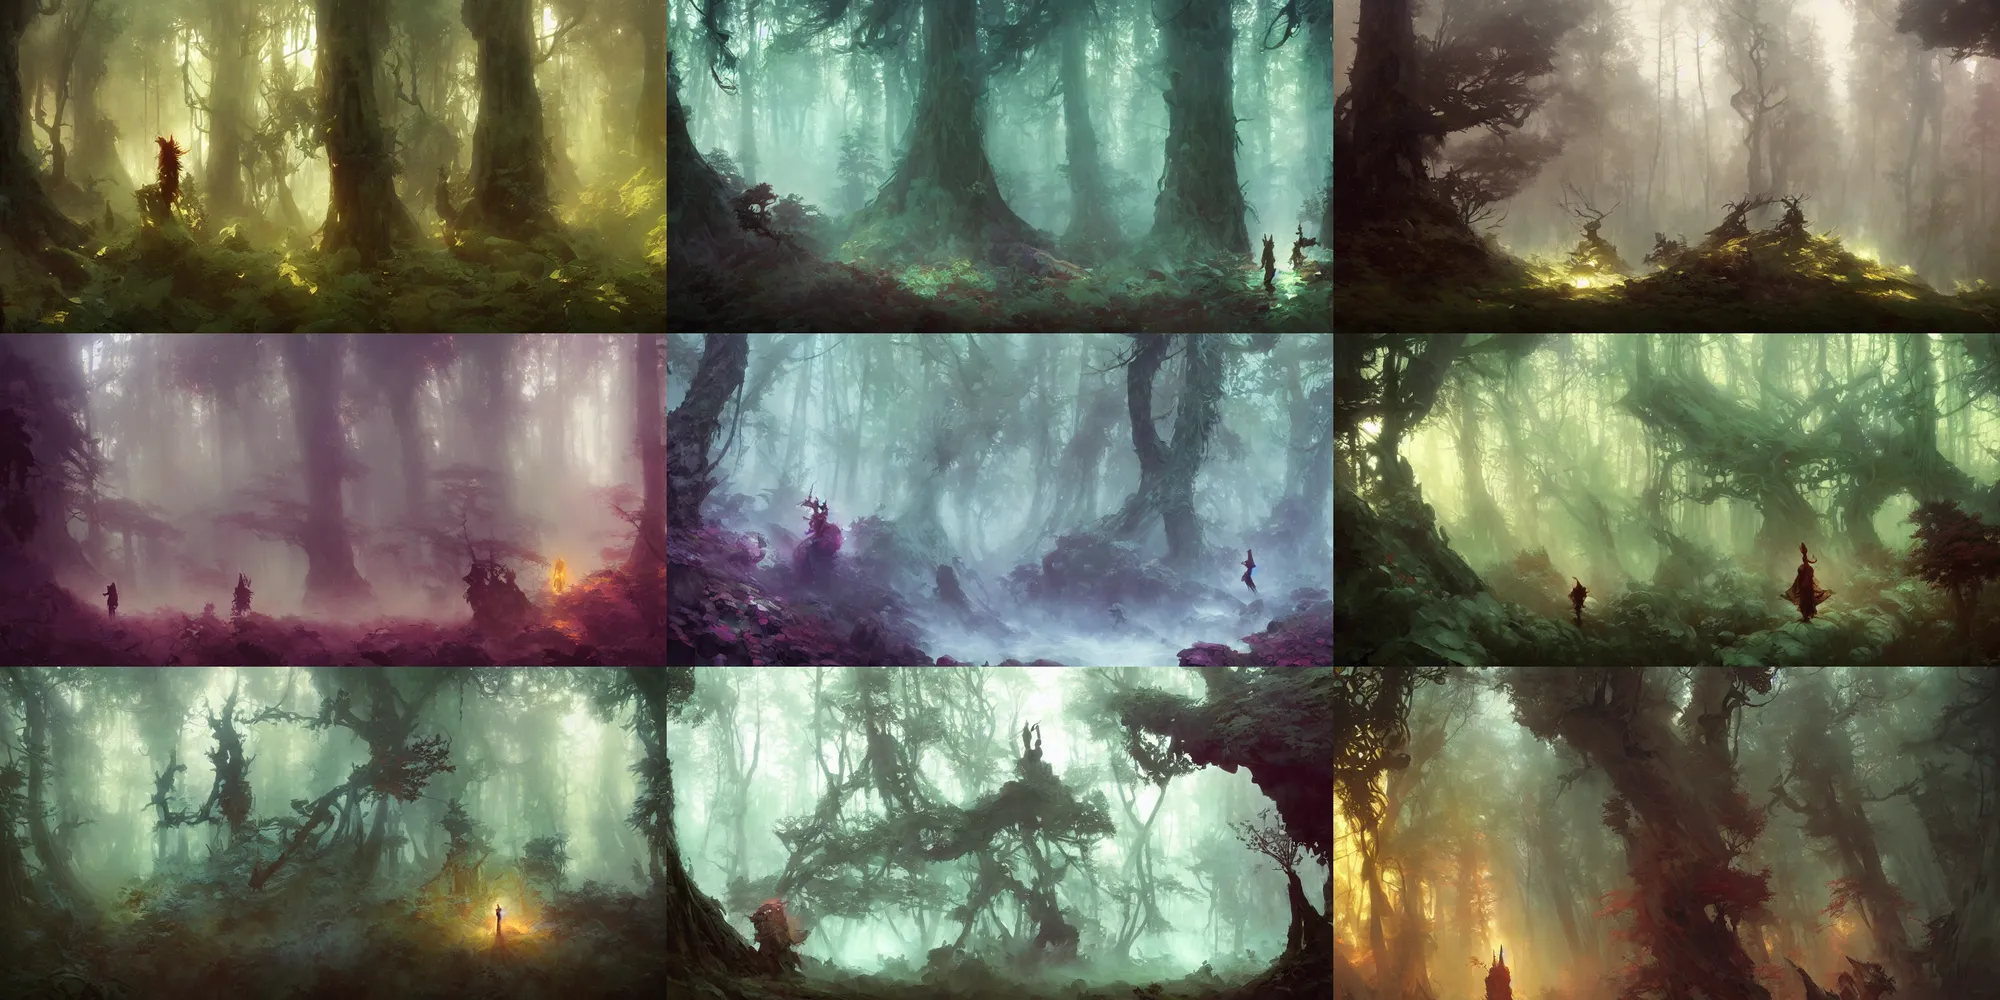 Prompt: mystical forest, fantasy, art by craig mullins, peter mohrbacher, ruan jia, reza afshar, ivan aivazovsky, marc simonetti, victo ngai, alphonse mucha